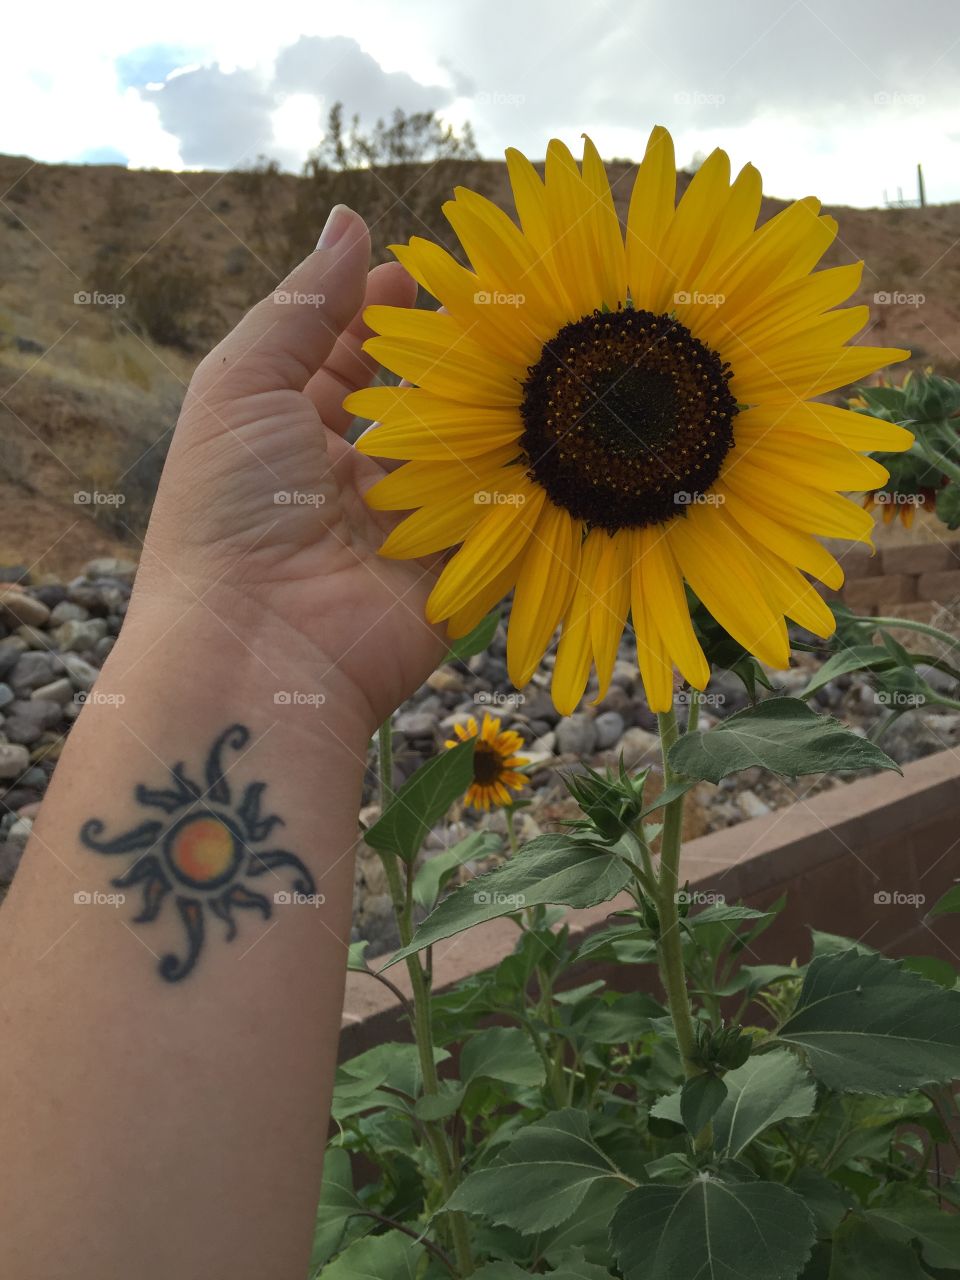 Sunshine and sunflowers.